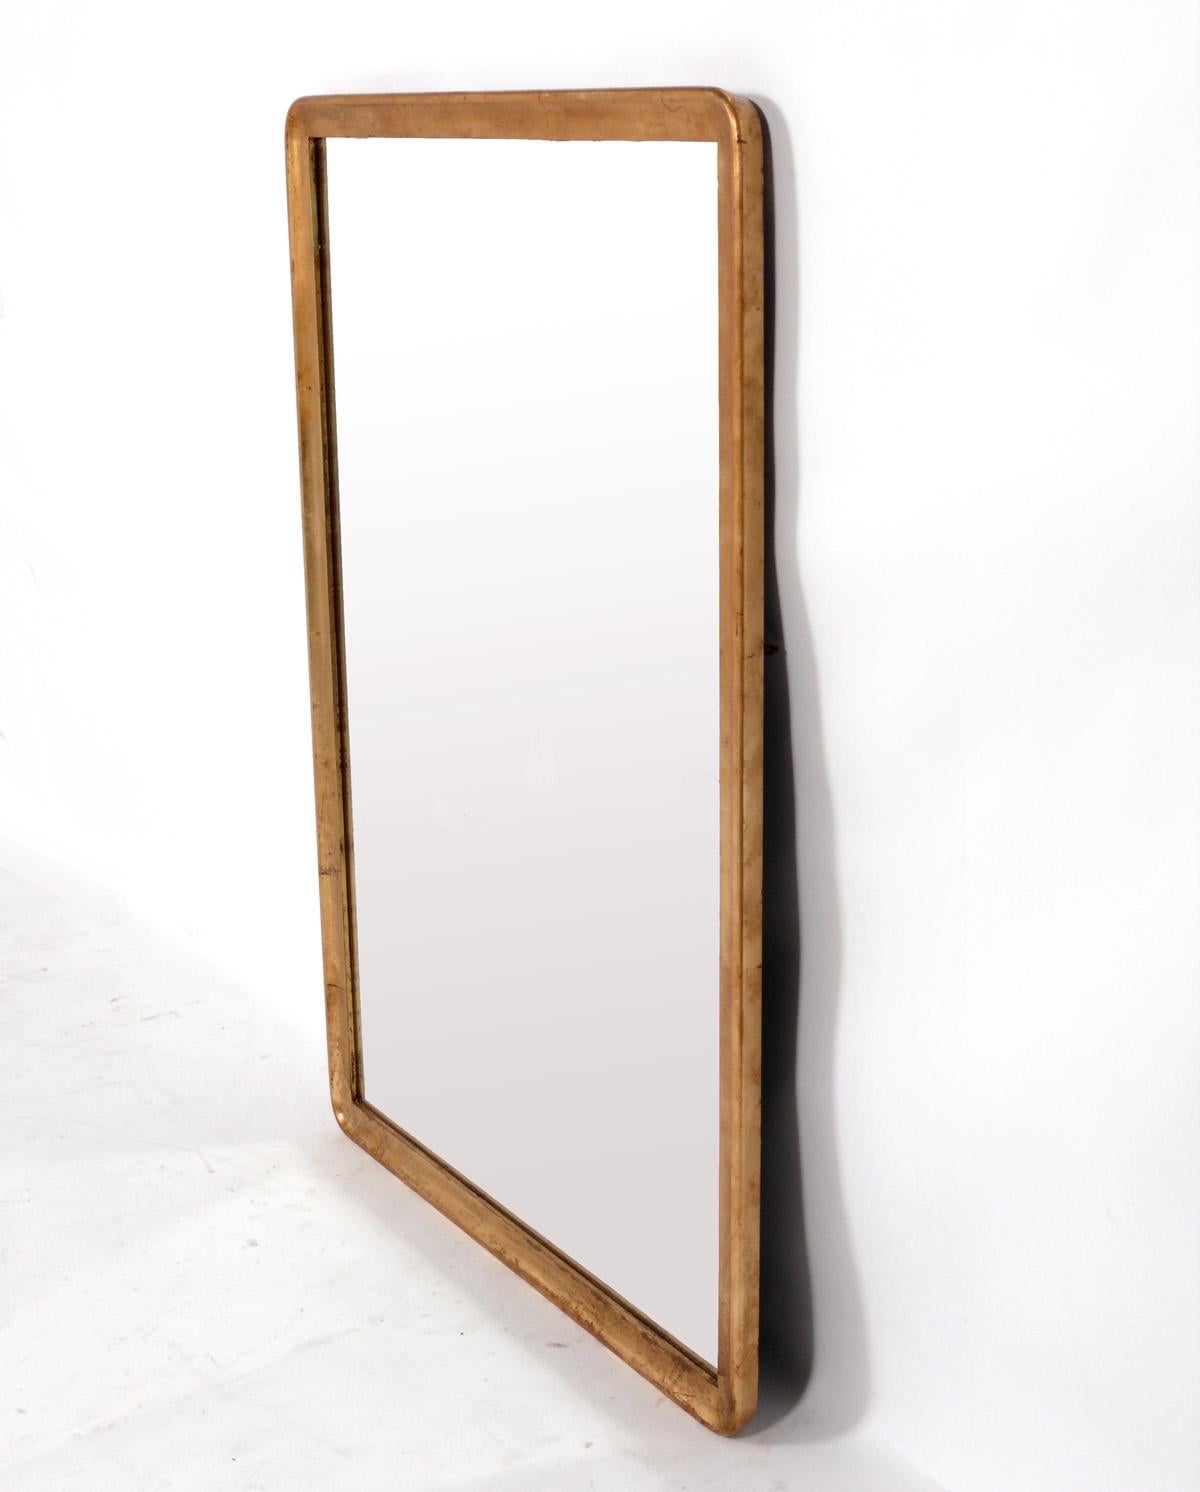 Gilt wood mirror, American, circa 1950s. Retains wonderful original patina to the gilt wood finish. It is an impressive size, measuring 46.5